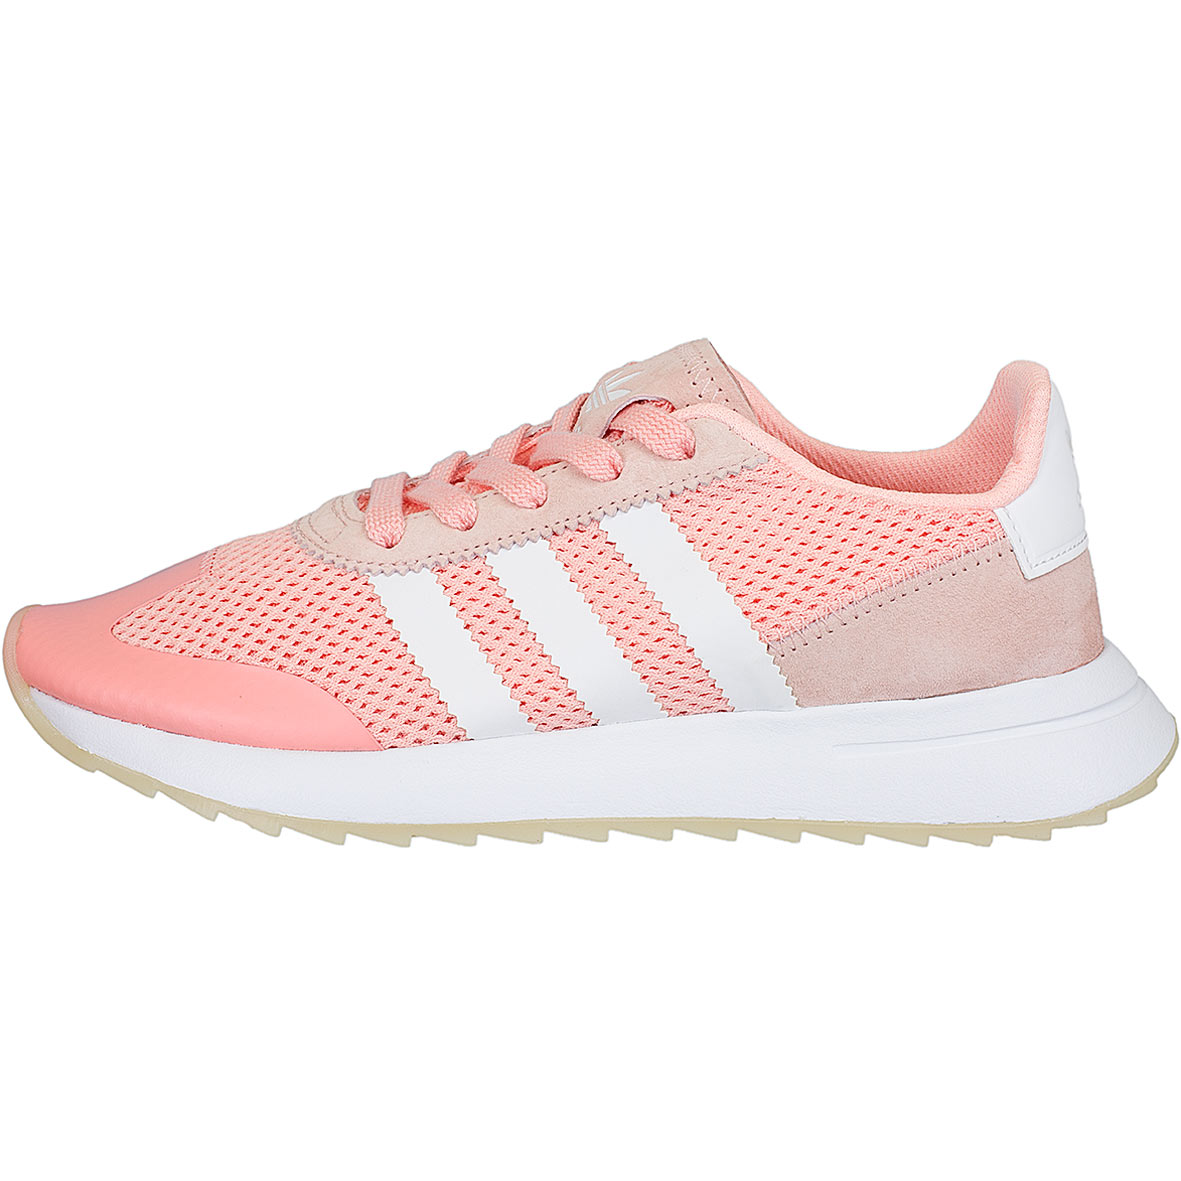 ☆ Adidas Originals Damen Sneaker Flashback pink/pink - hier bestellen!